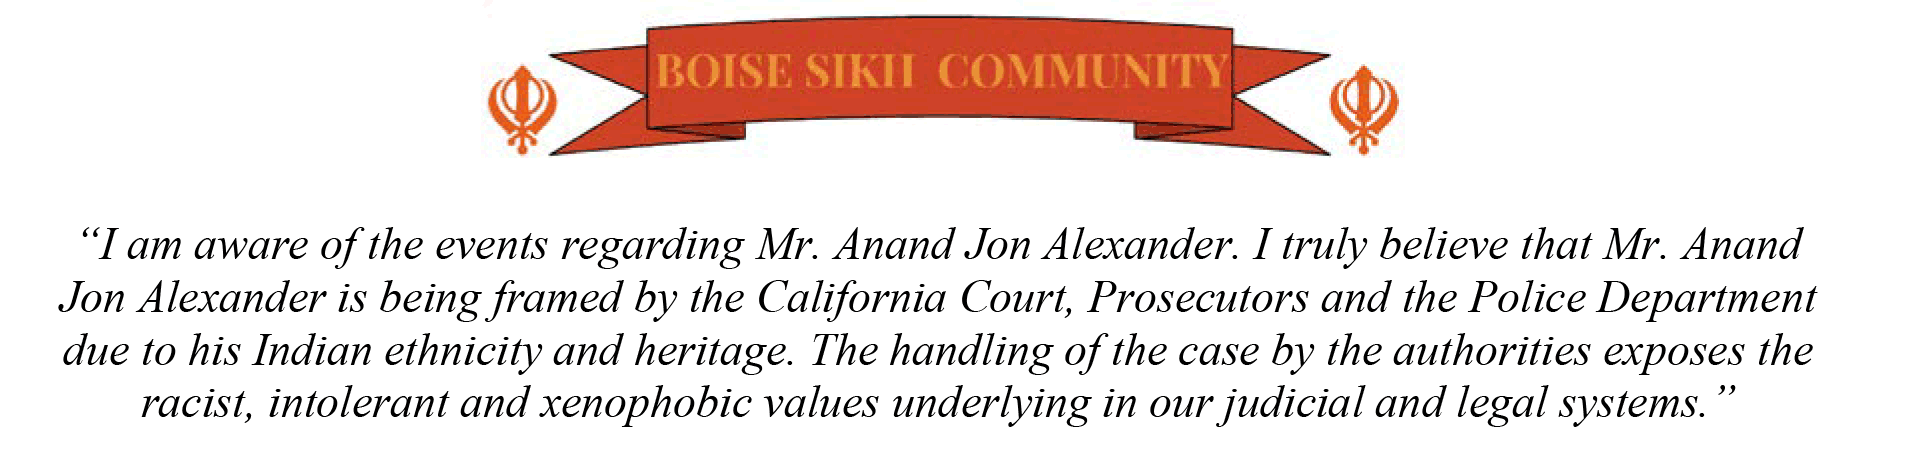 Boise Sikh Community